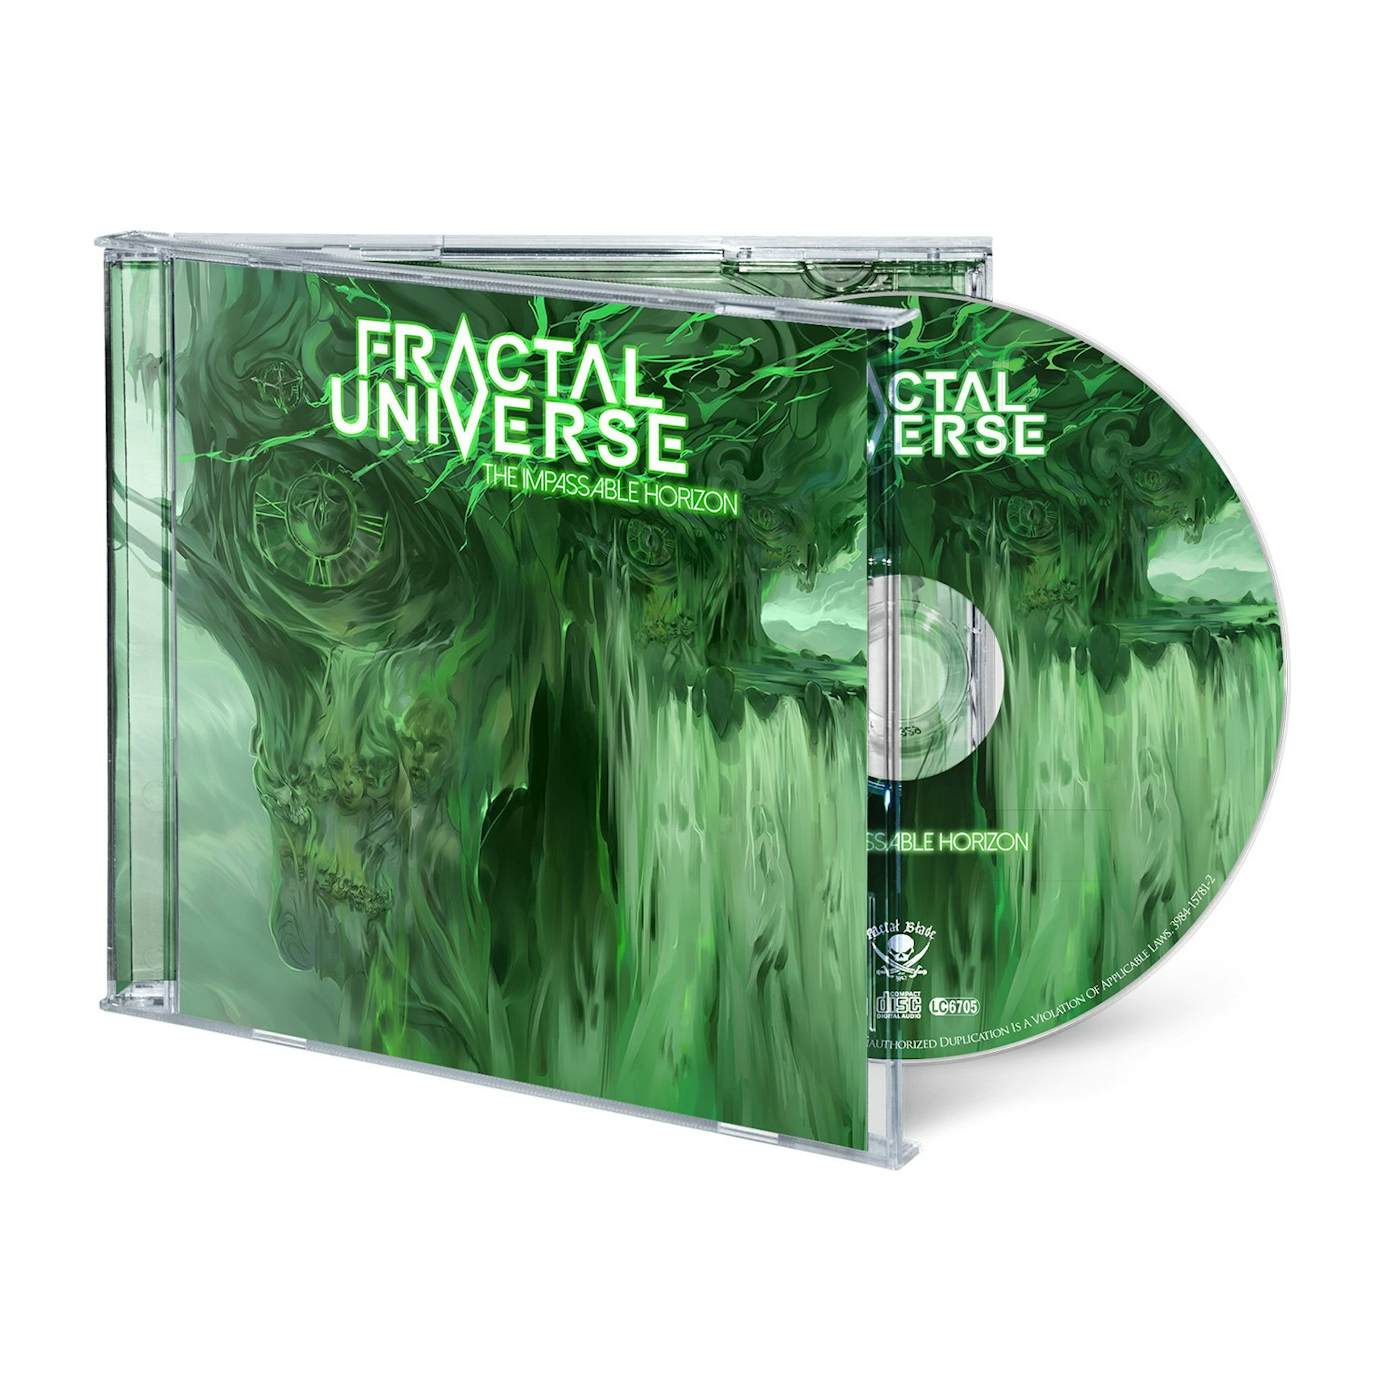 Fractal Universe "The Impassable Horizon" CD